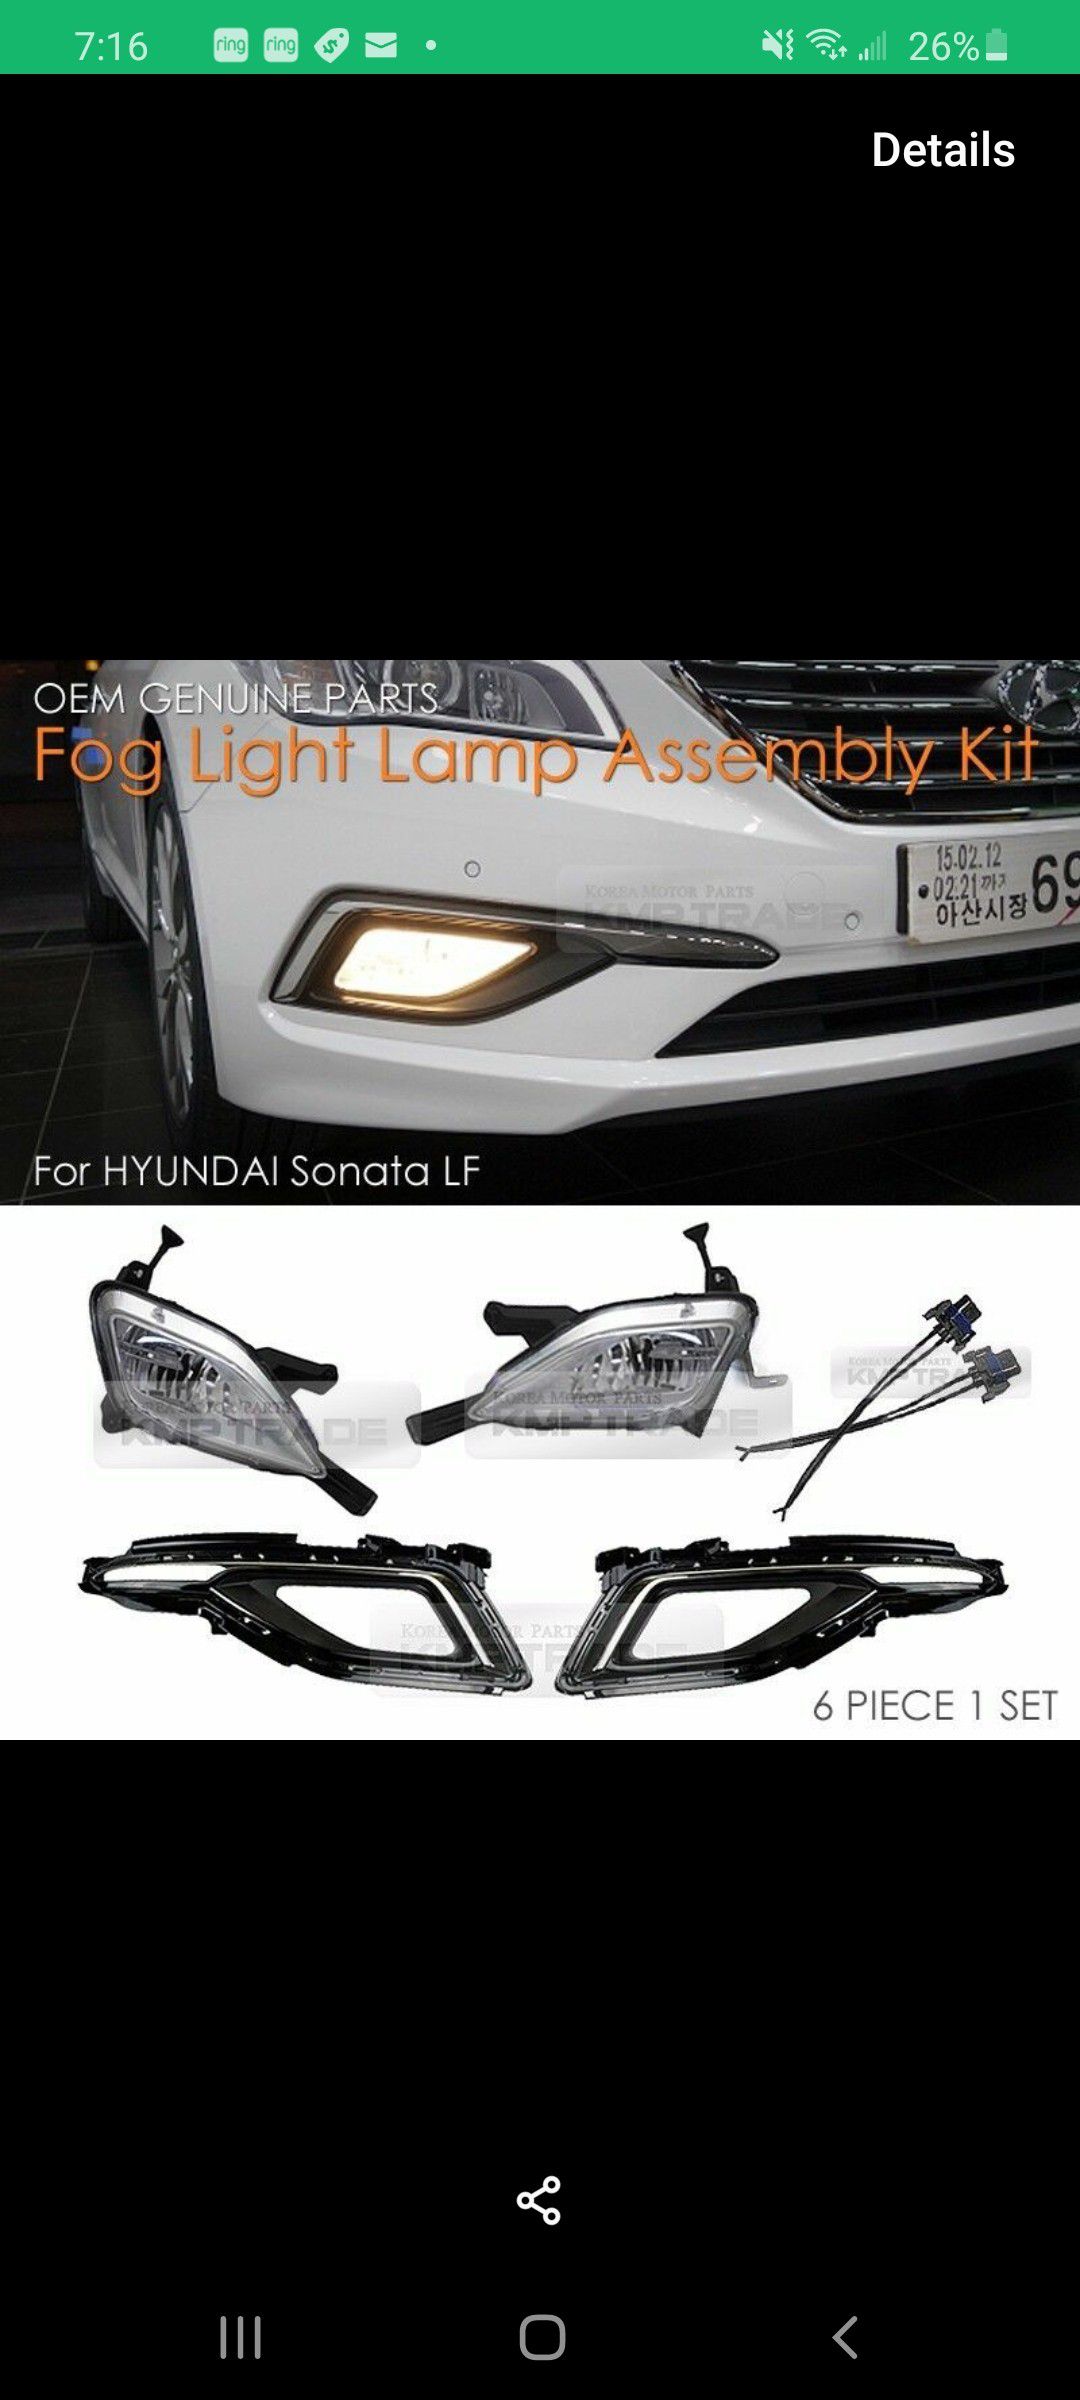 EOM Parts Fog Light Lamp Cover Connector 6EA Set for HYUNDAI 2015 - 2017 LF Sonata